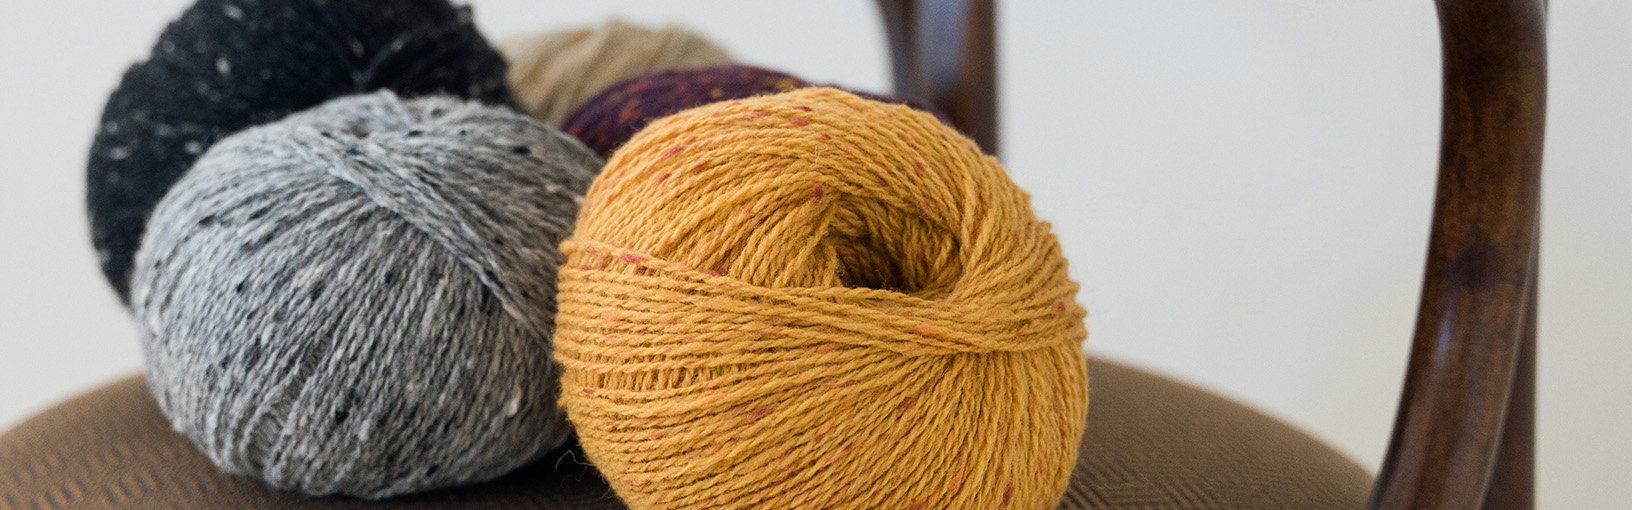 High quality yarns for knitting, crocheting & felting Lana Grossa Yarns | Sock yarns | Hand-dyed